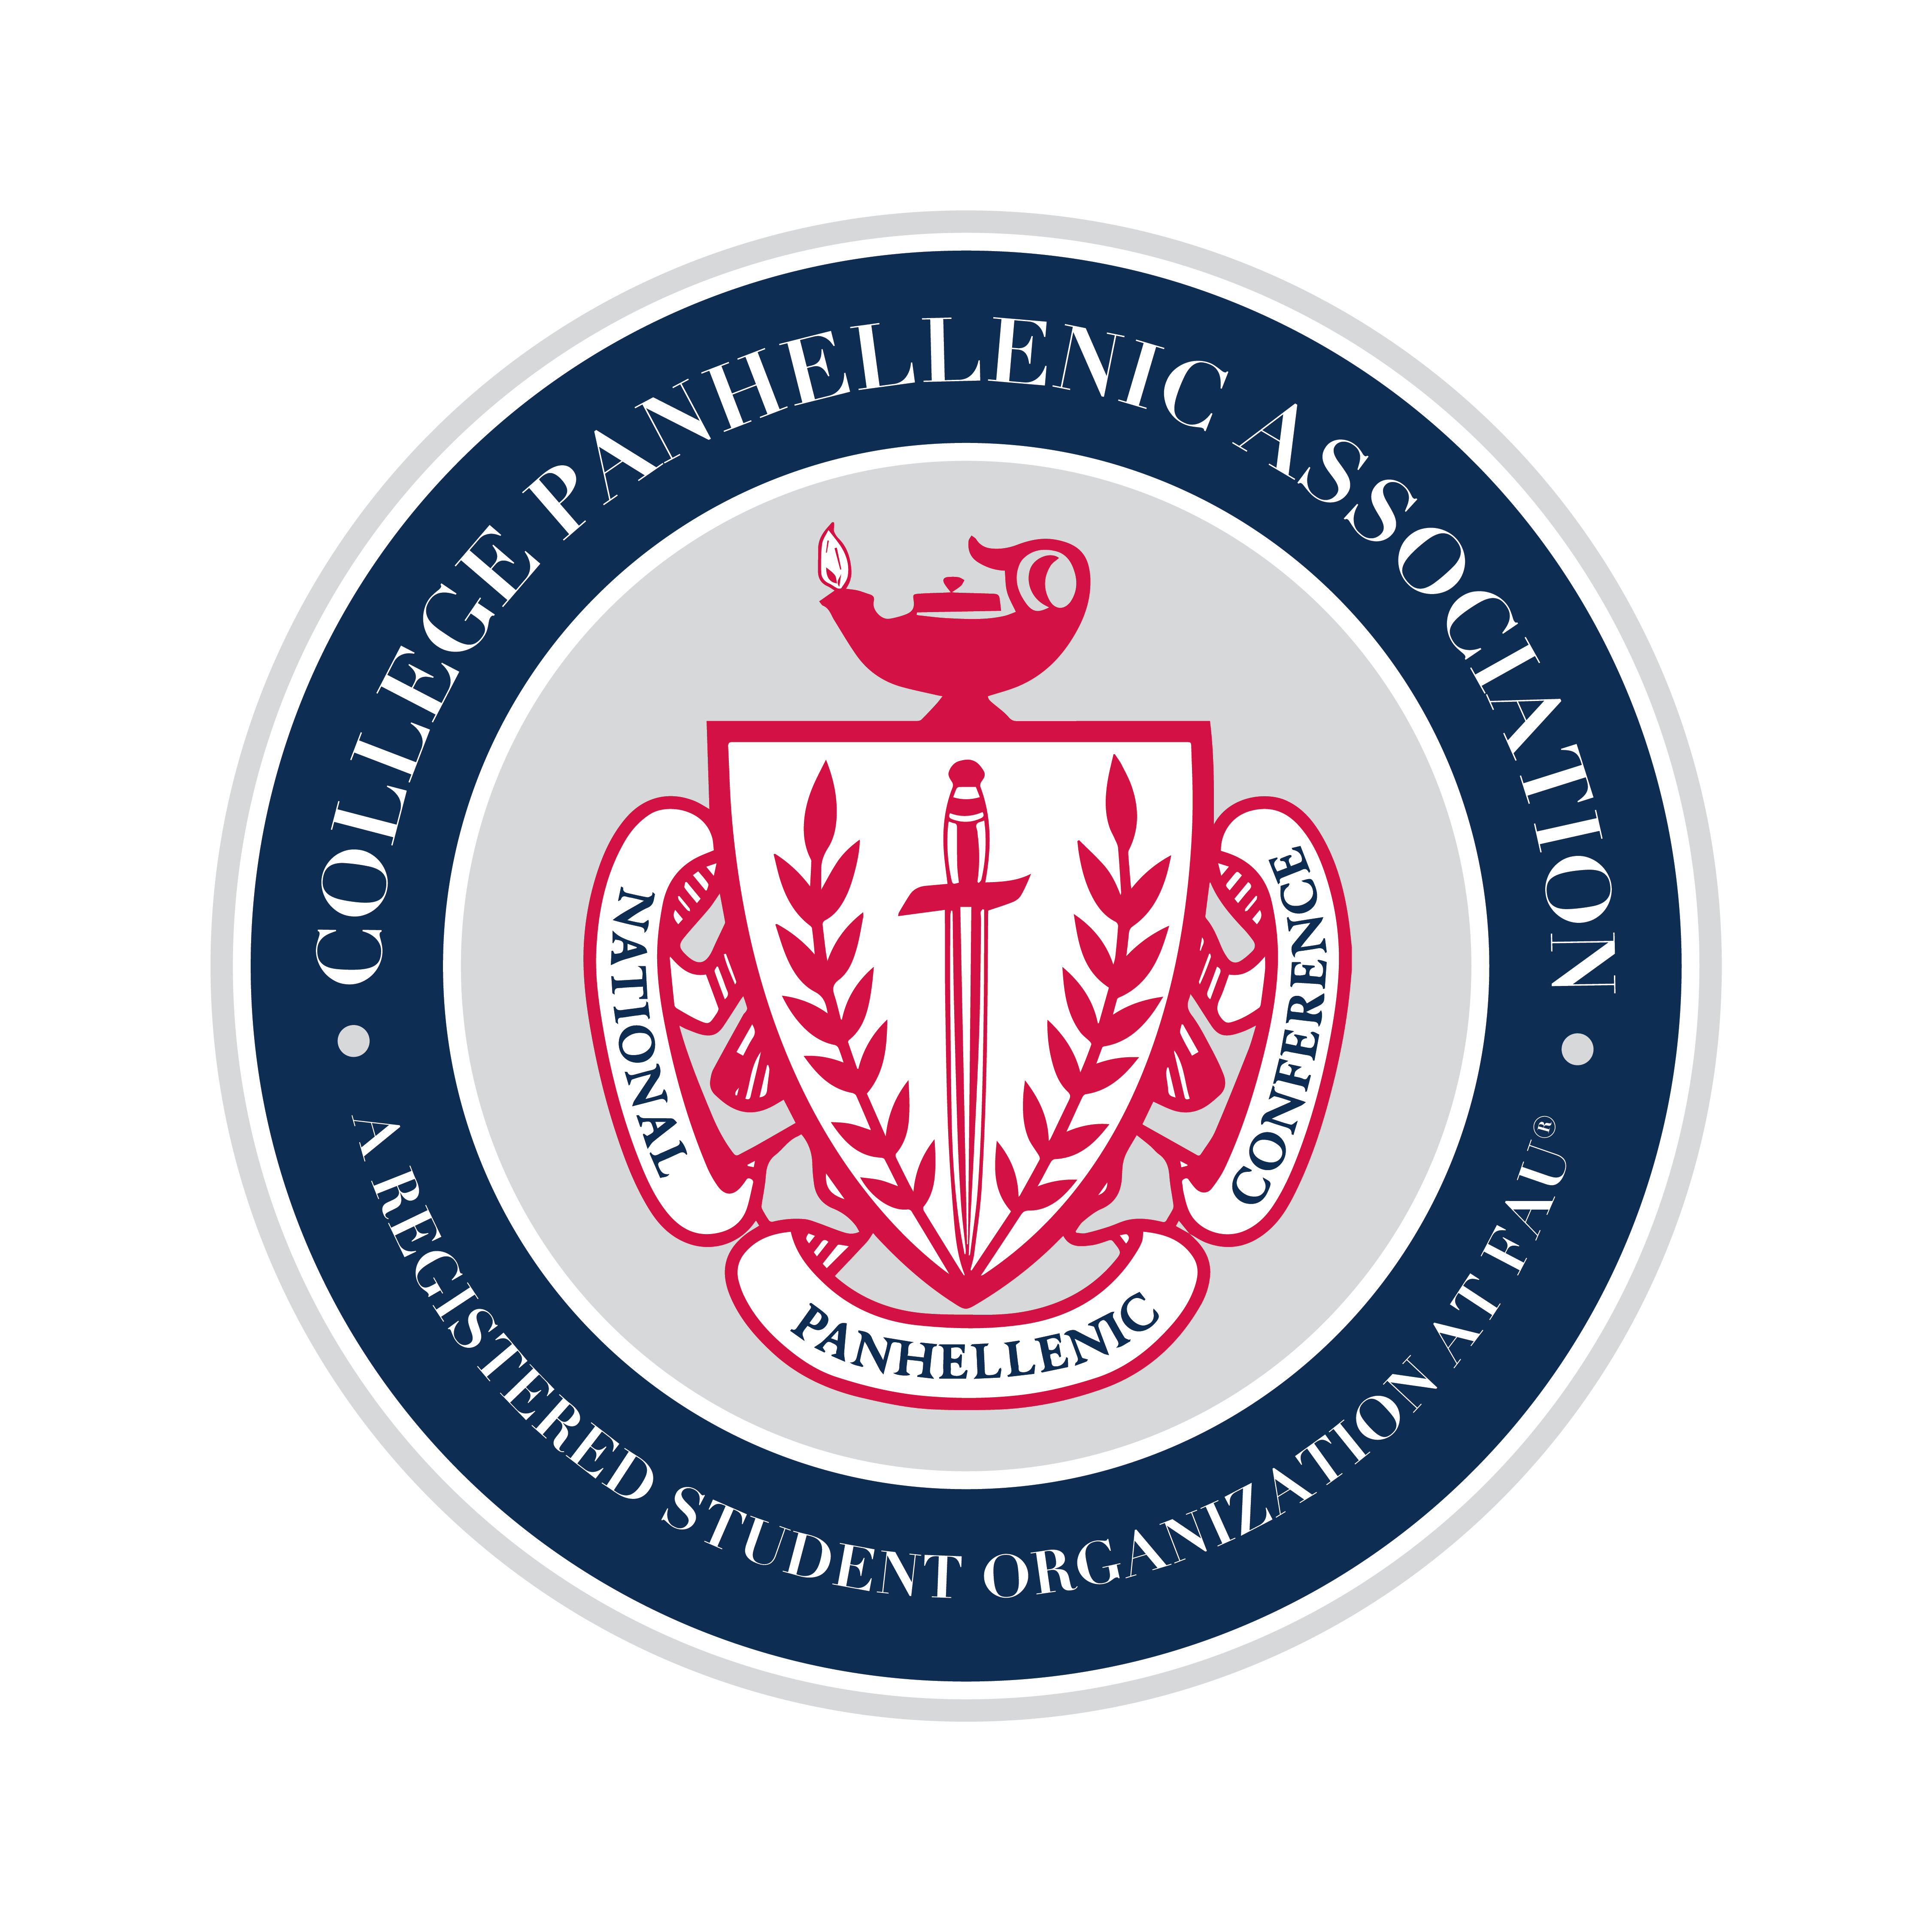 College Panhellenic Association